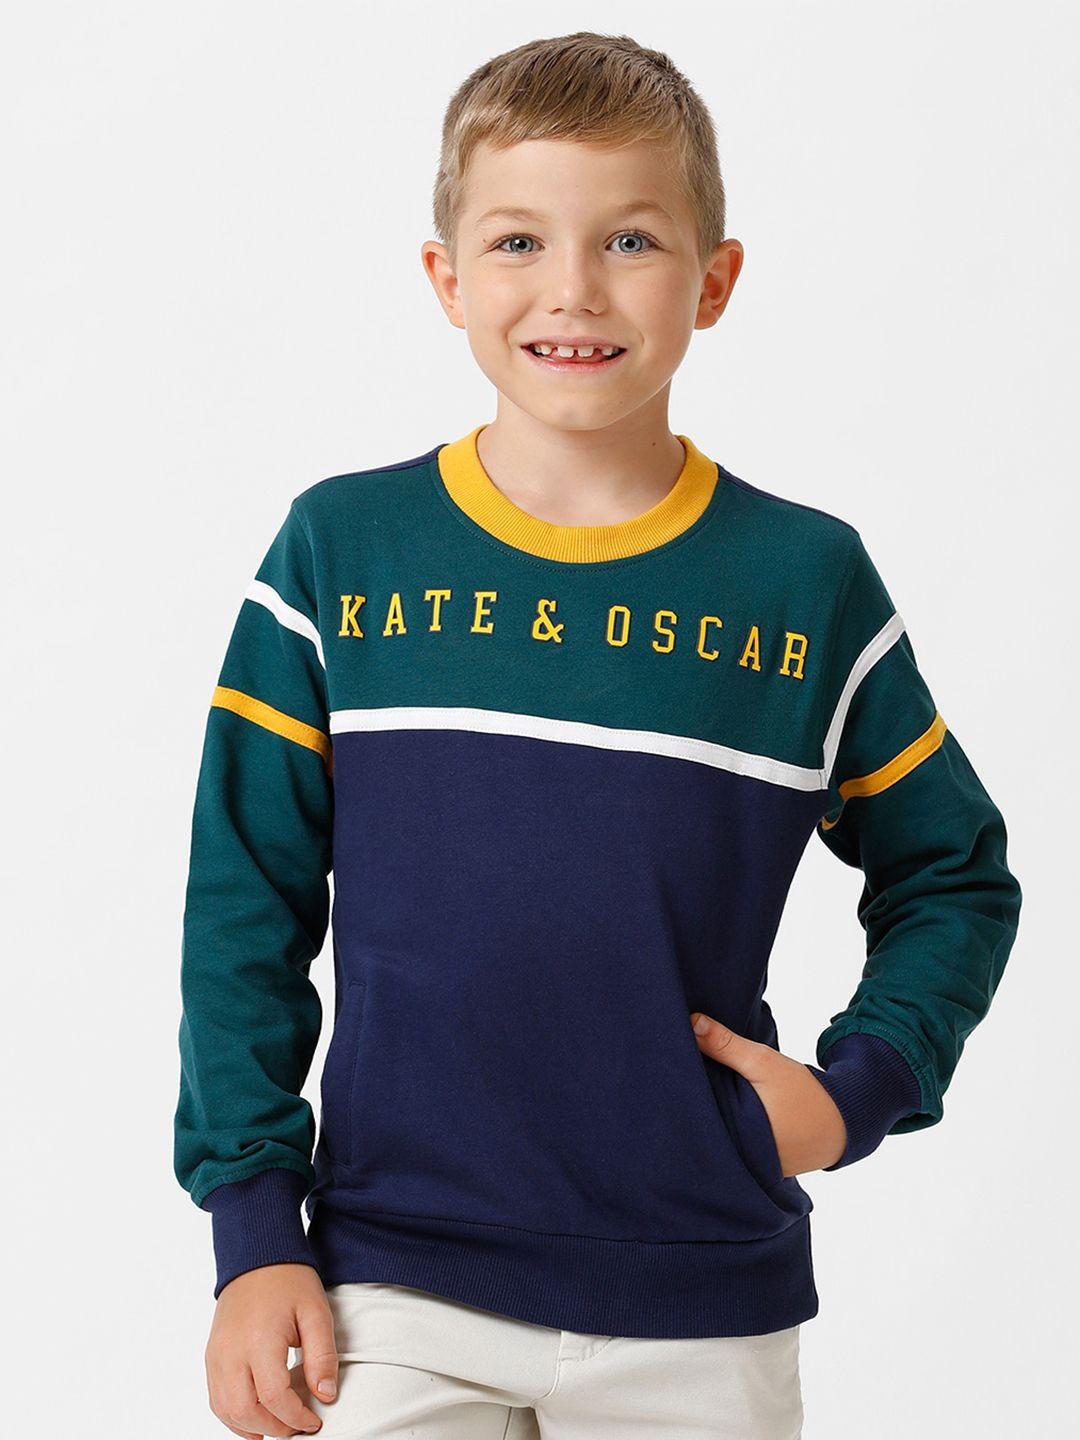 kate & oscar boys colourblocked round neck cotton pullover sweatshirt